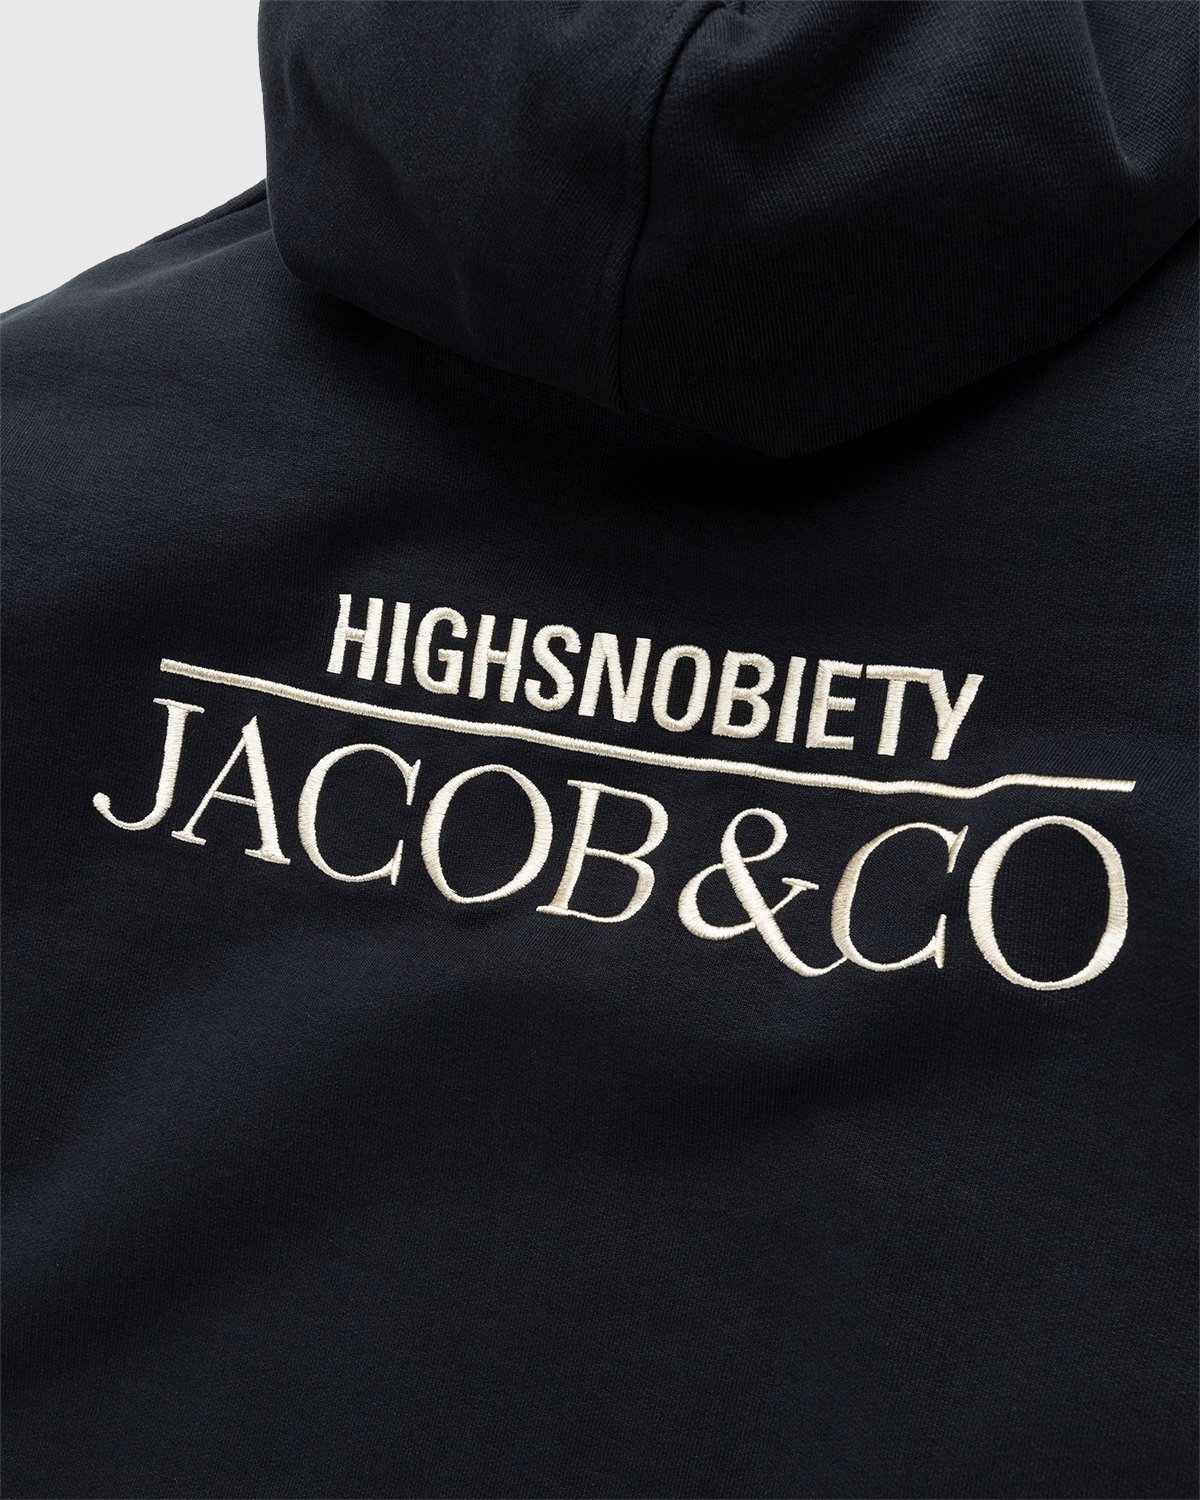 Jacob & Co. x Highsnobiety - Logo Fleece Hoodie Black - Clothing - Black - Image 3